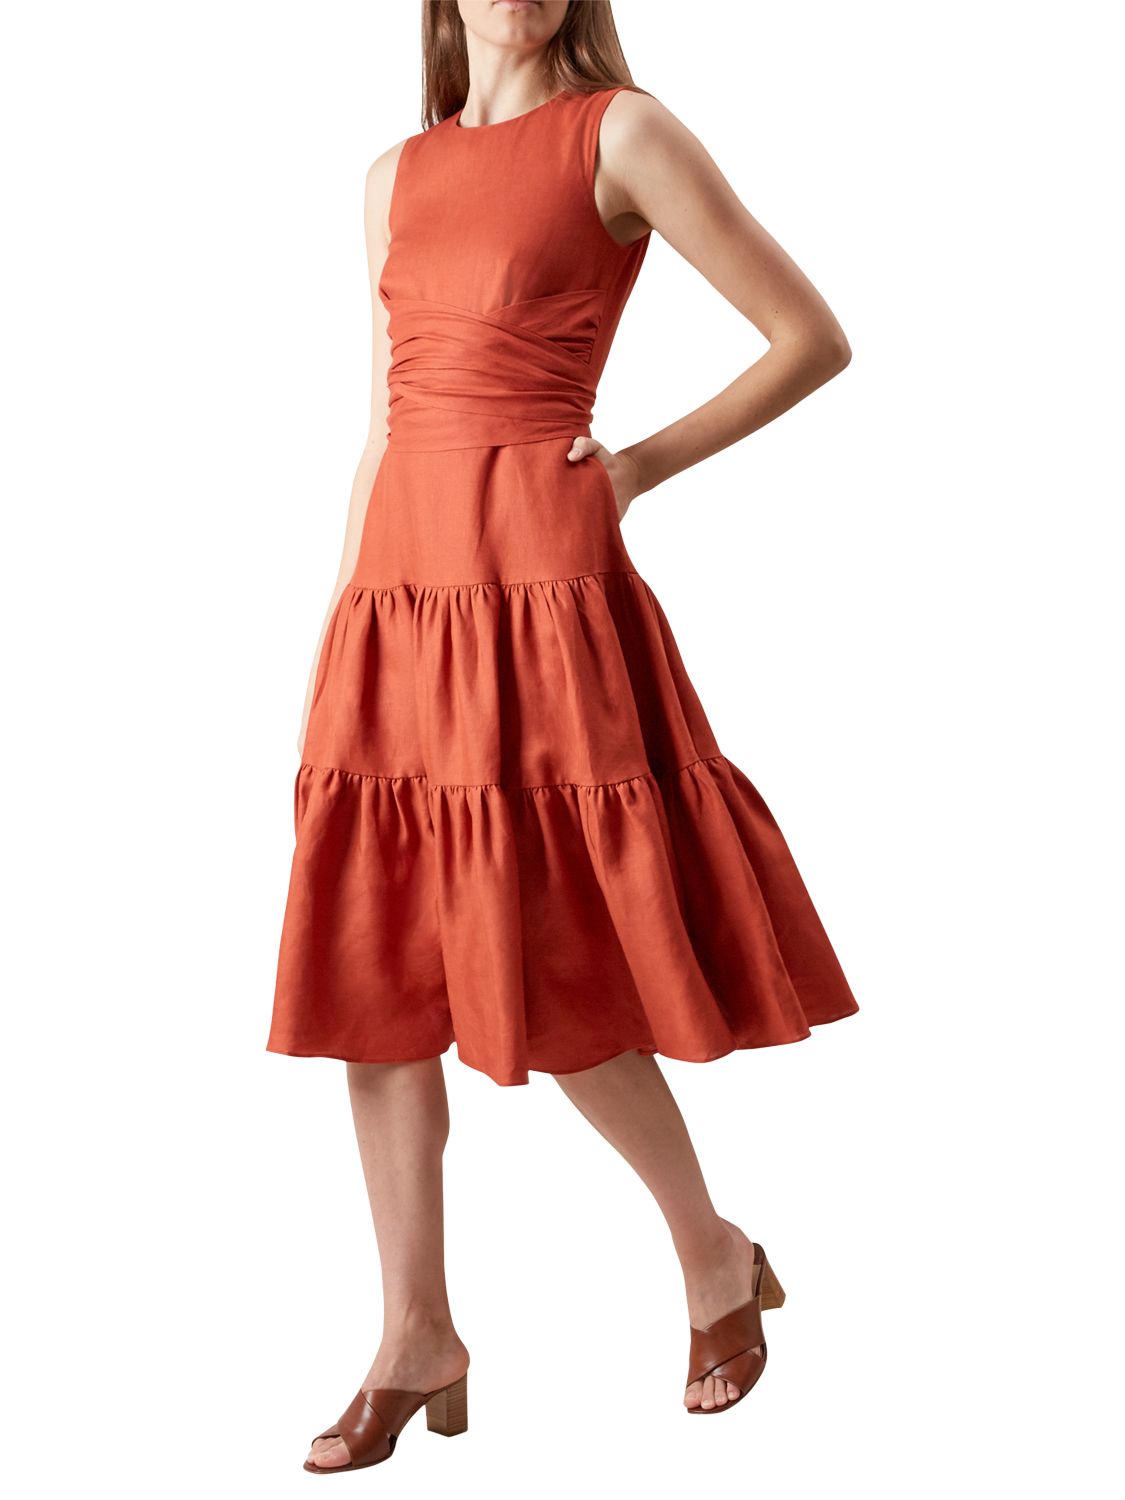 Hobbs Seville Dress, Cayenne Red, 14